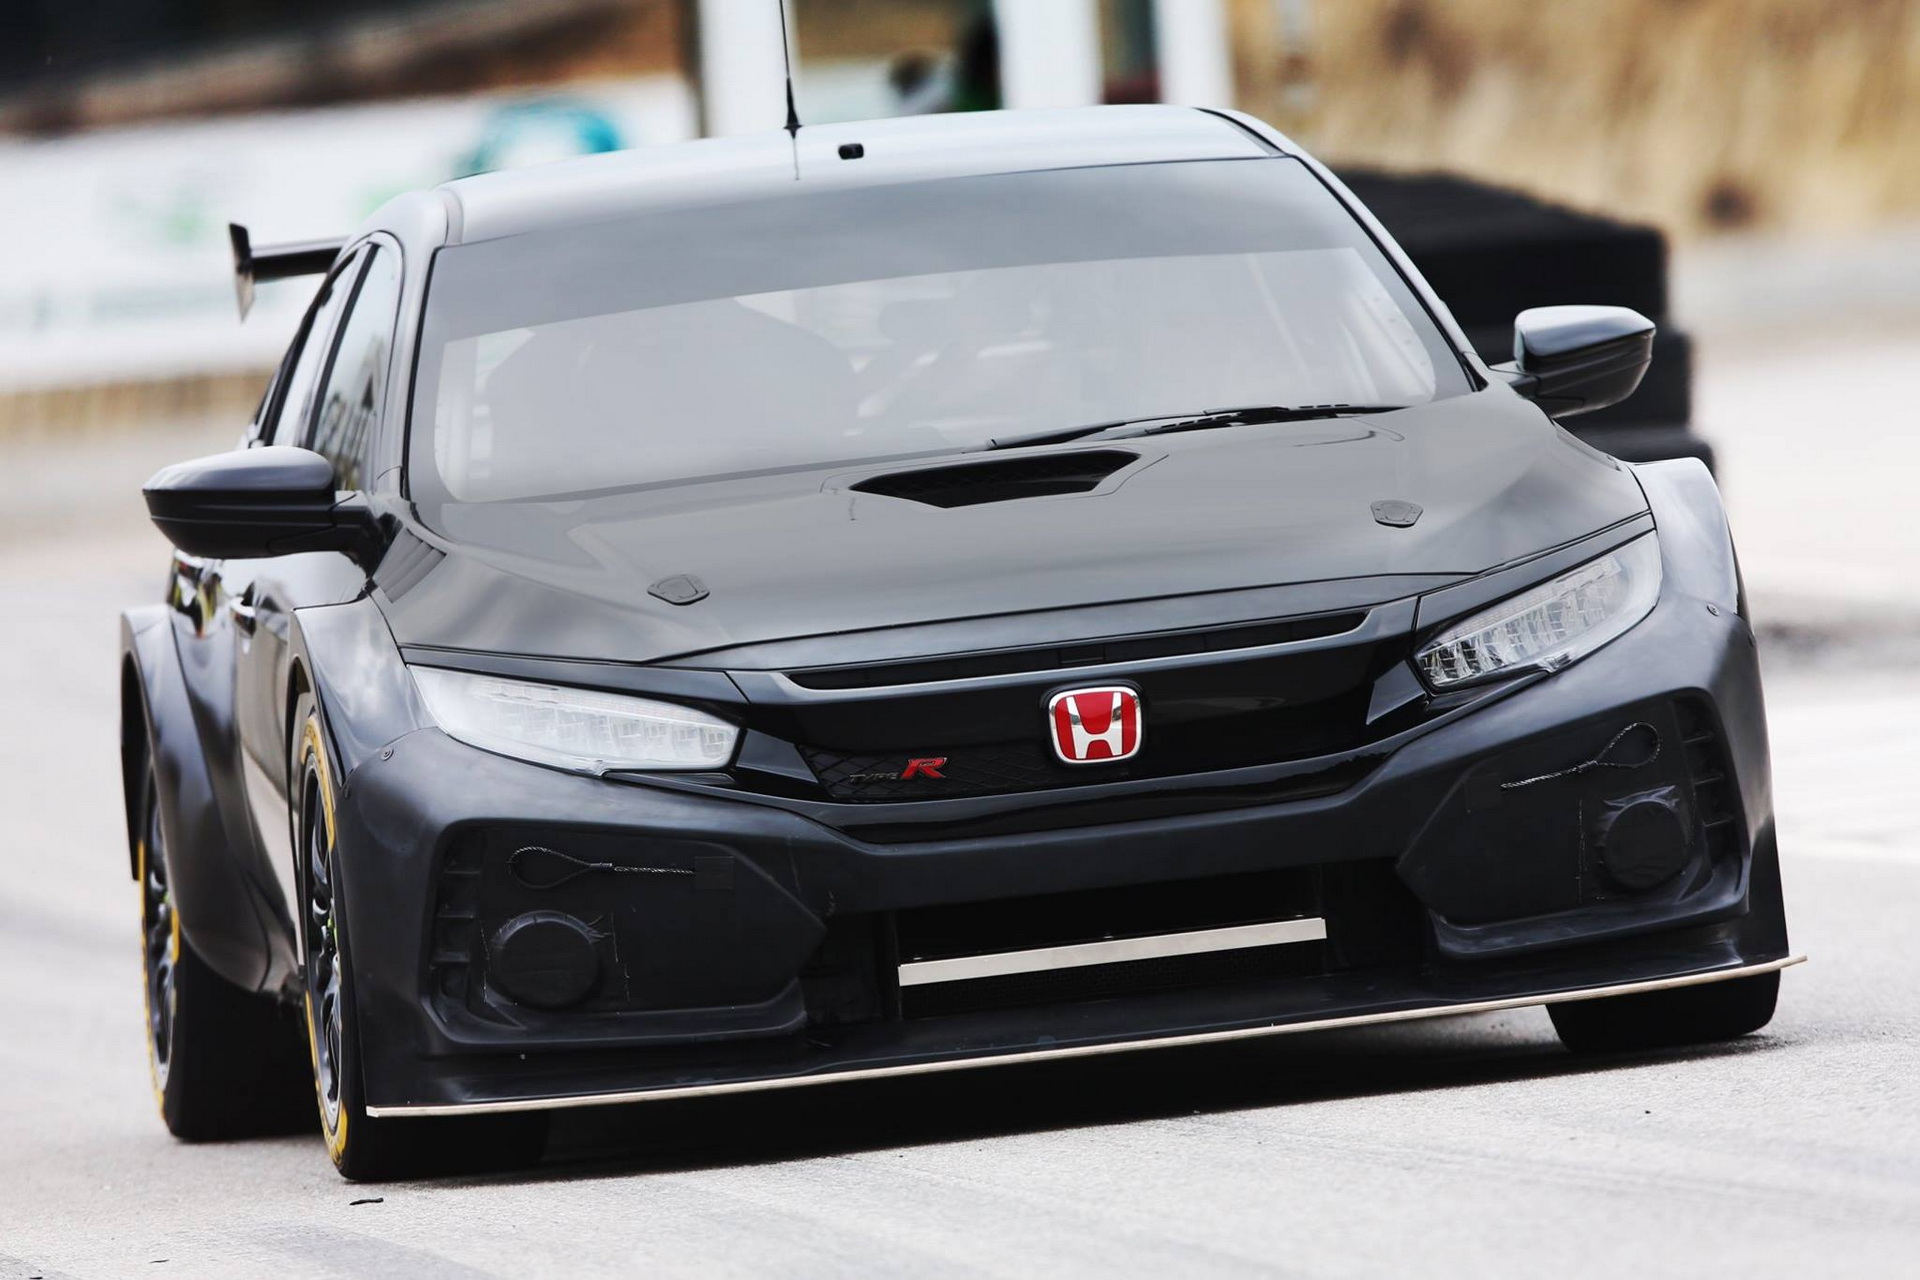 2018 Honda Civic Type R BTCC racing car unveiled